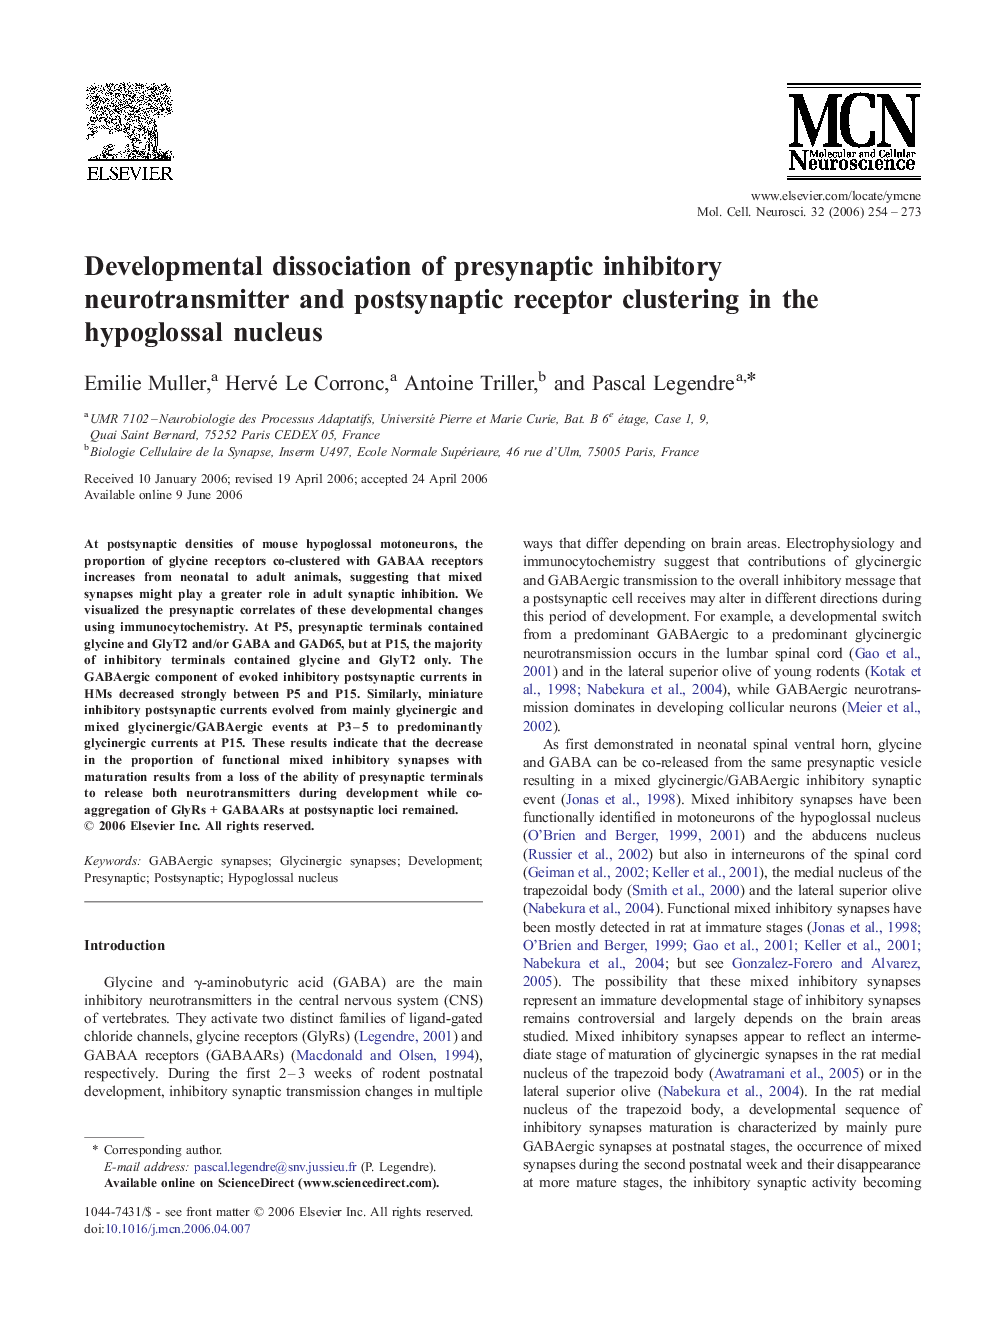 Developmental dissociation of presynaptic inhibitory neurotransmitter and postsynaptic receptor clustering in the hypoglossal nucleus